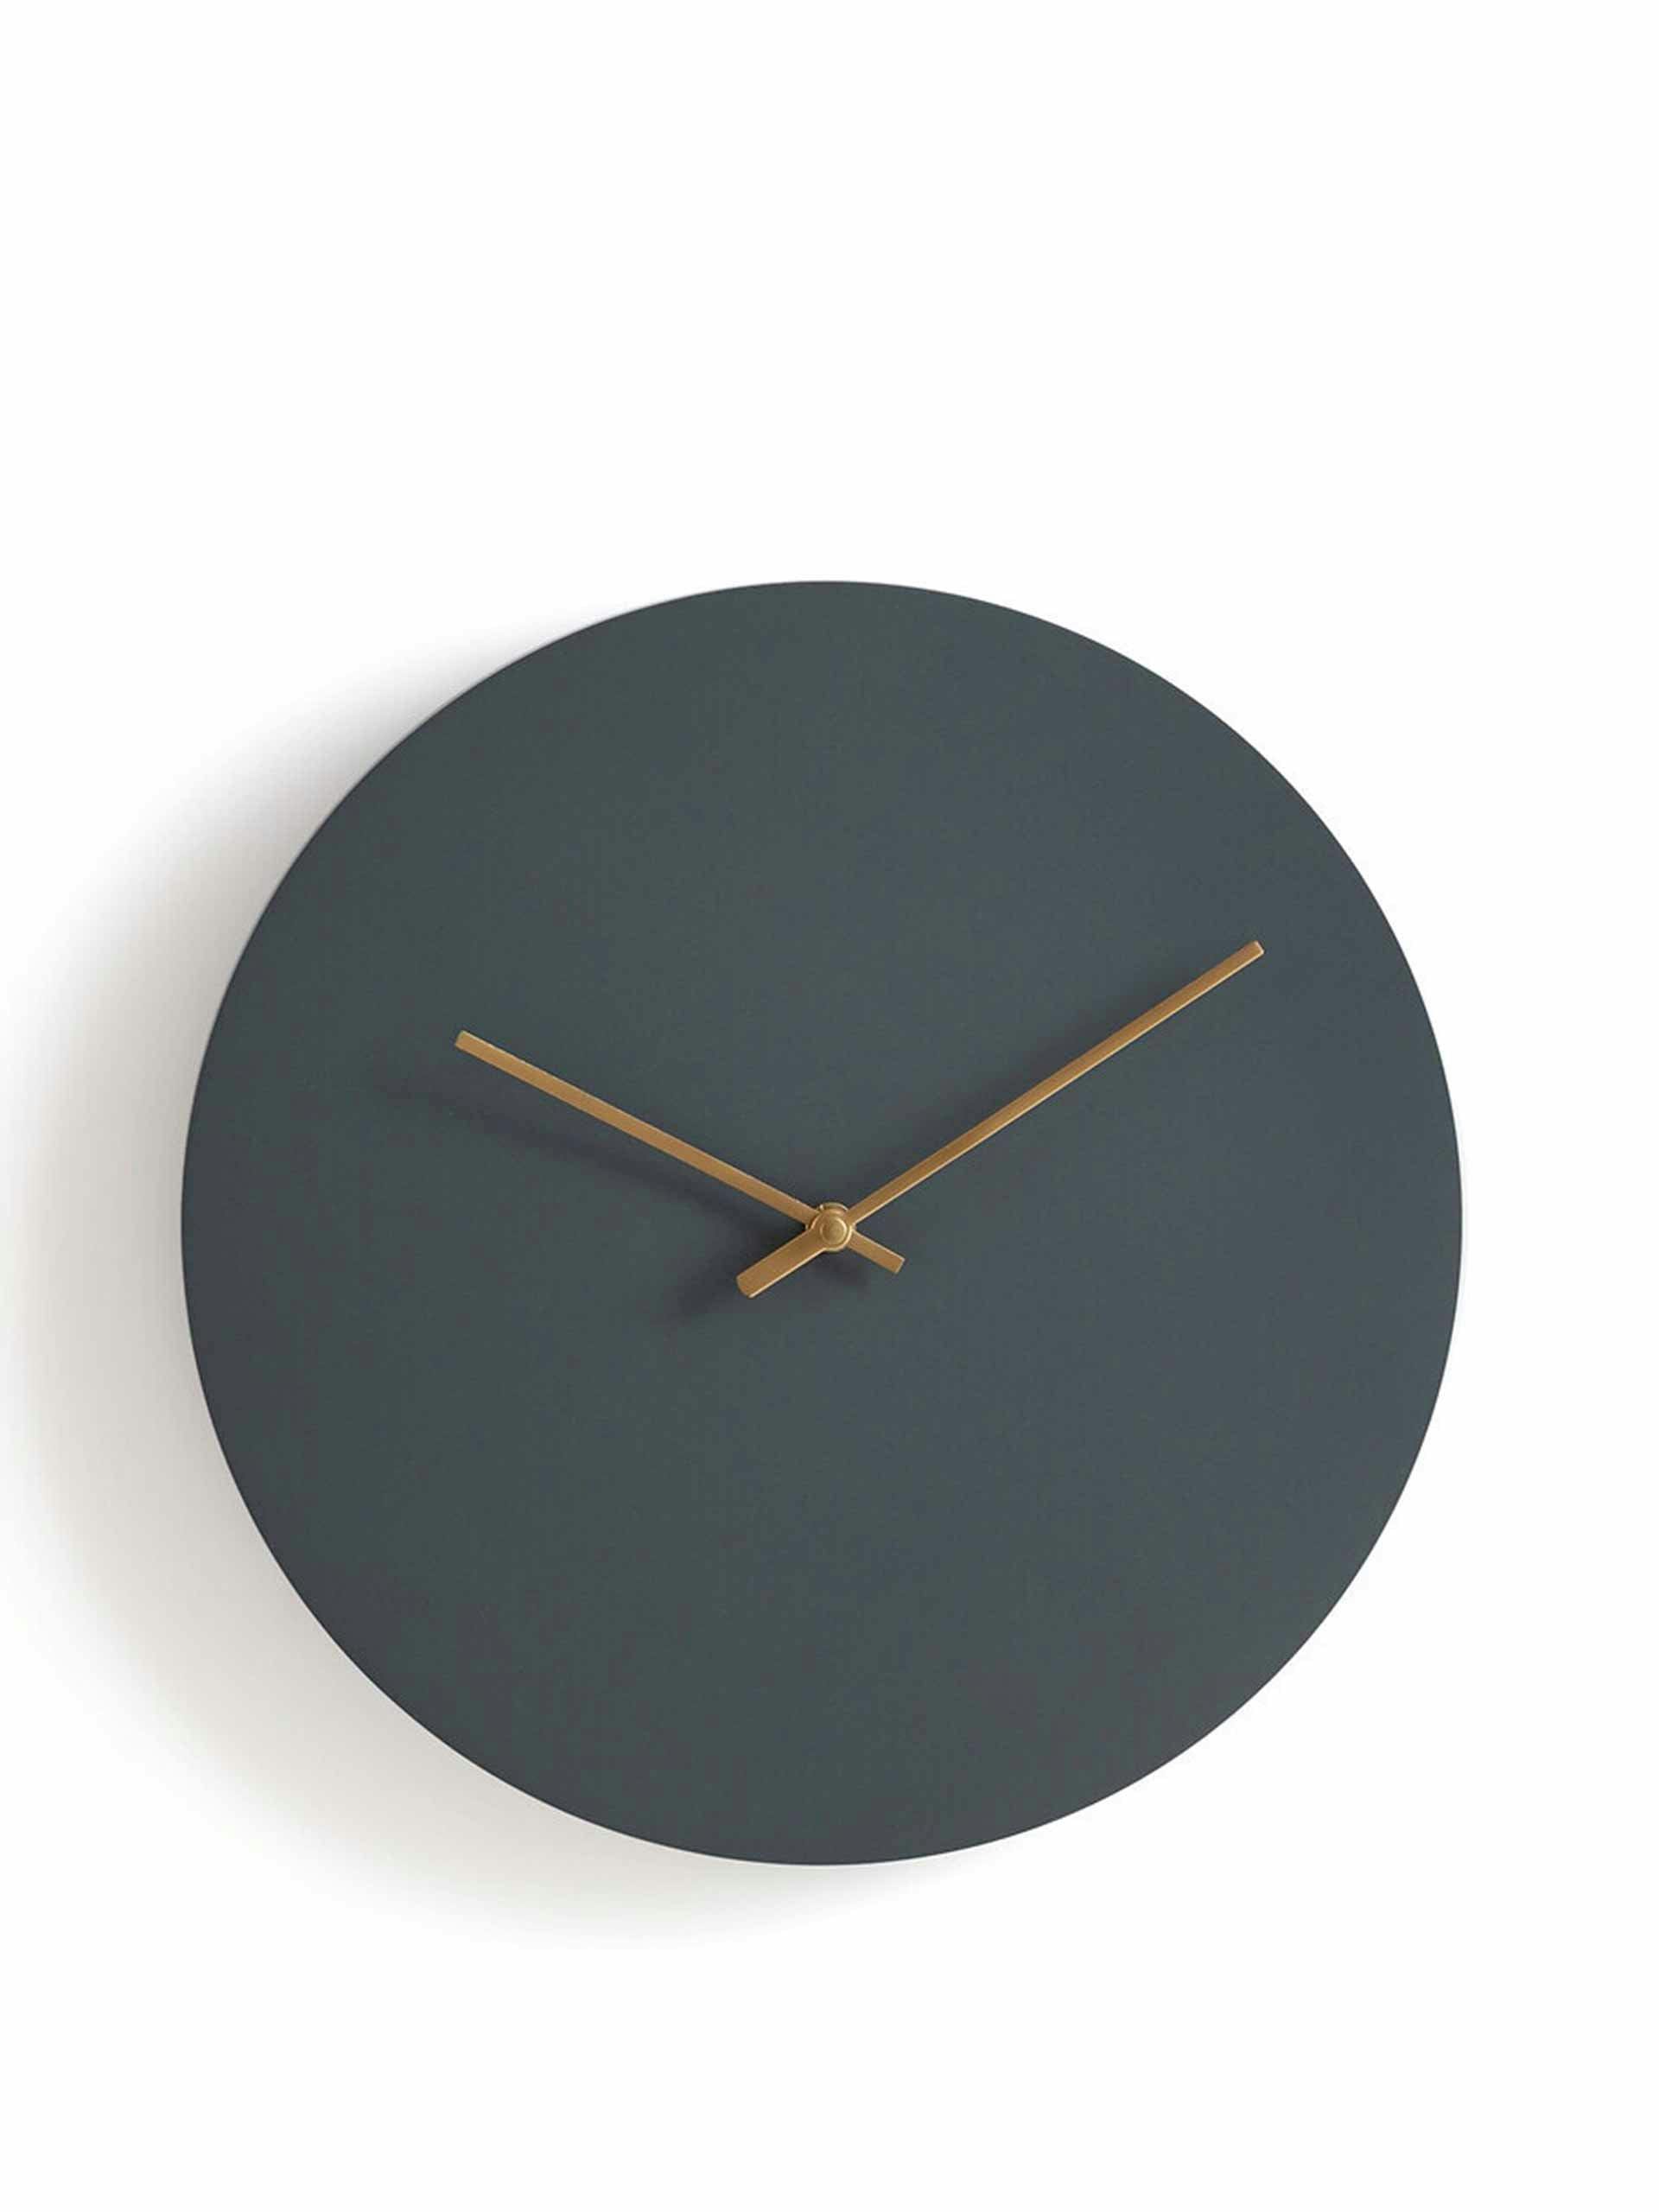 Minimal contemporary wall clock